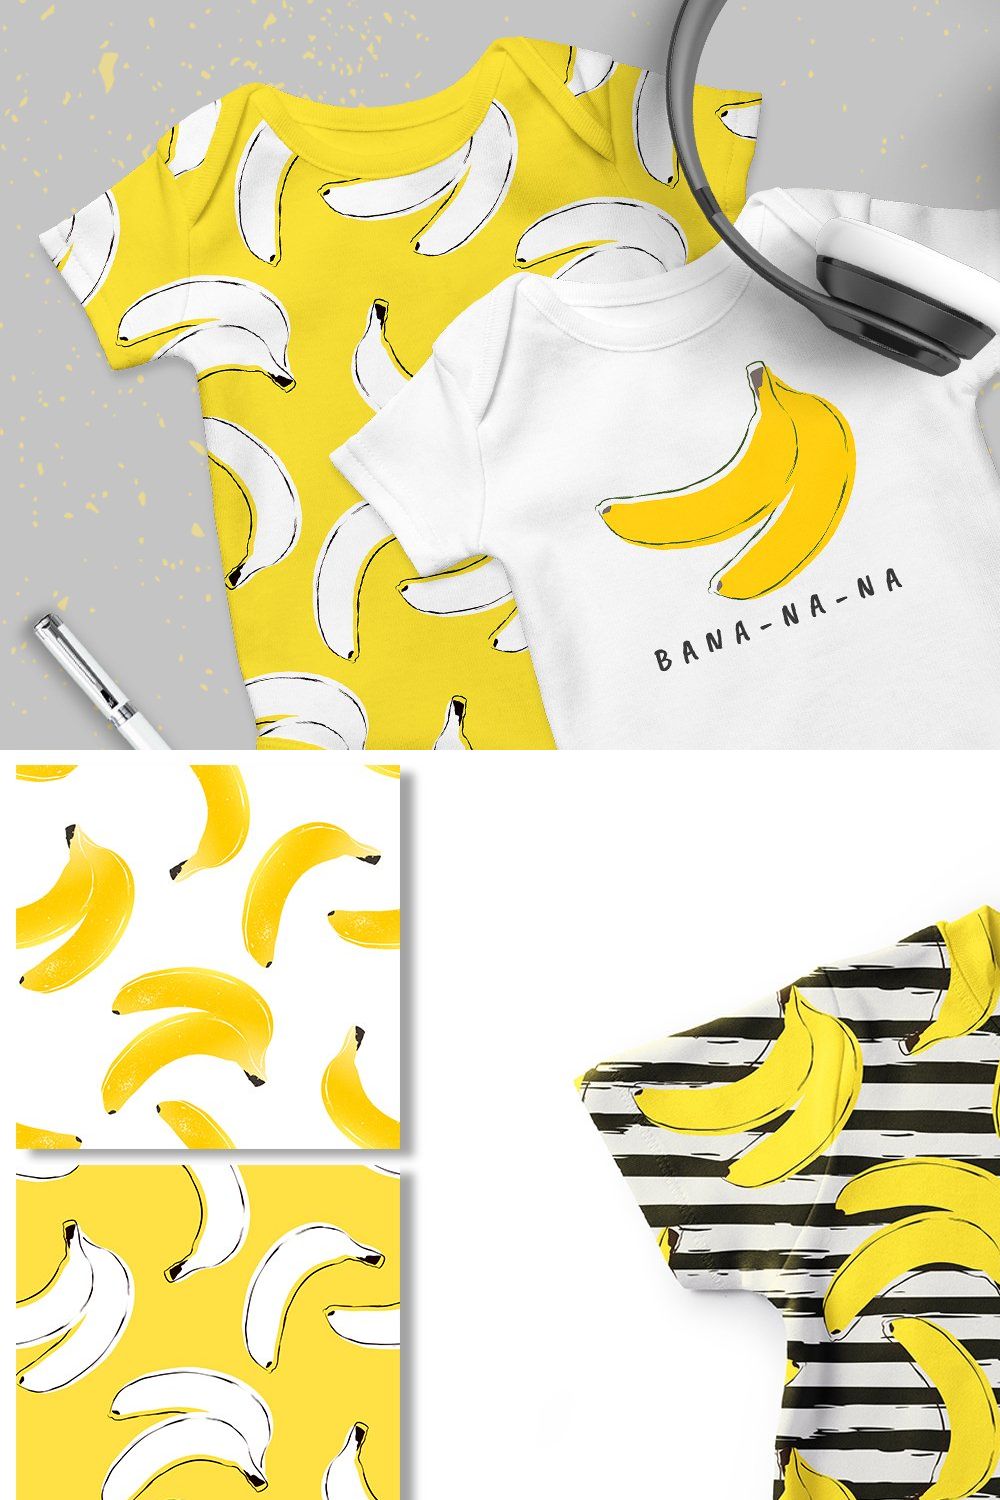 Fruit patterns. Sweet yellow bananas pinterest preview image.